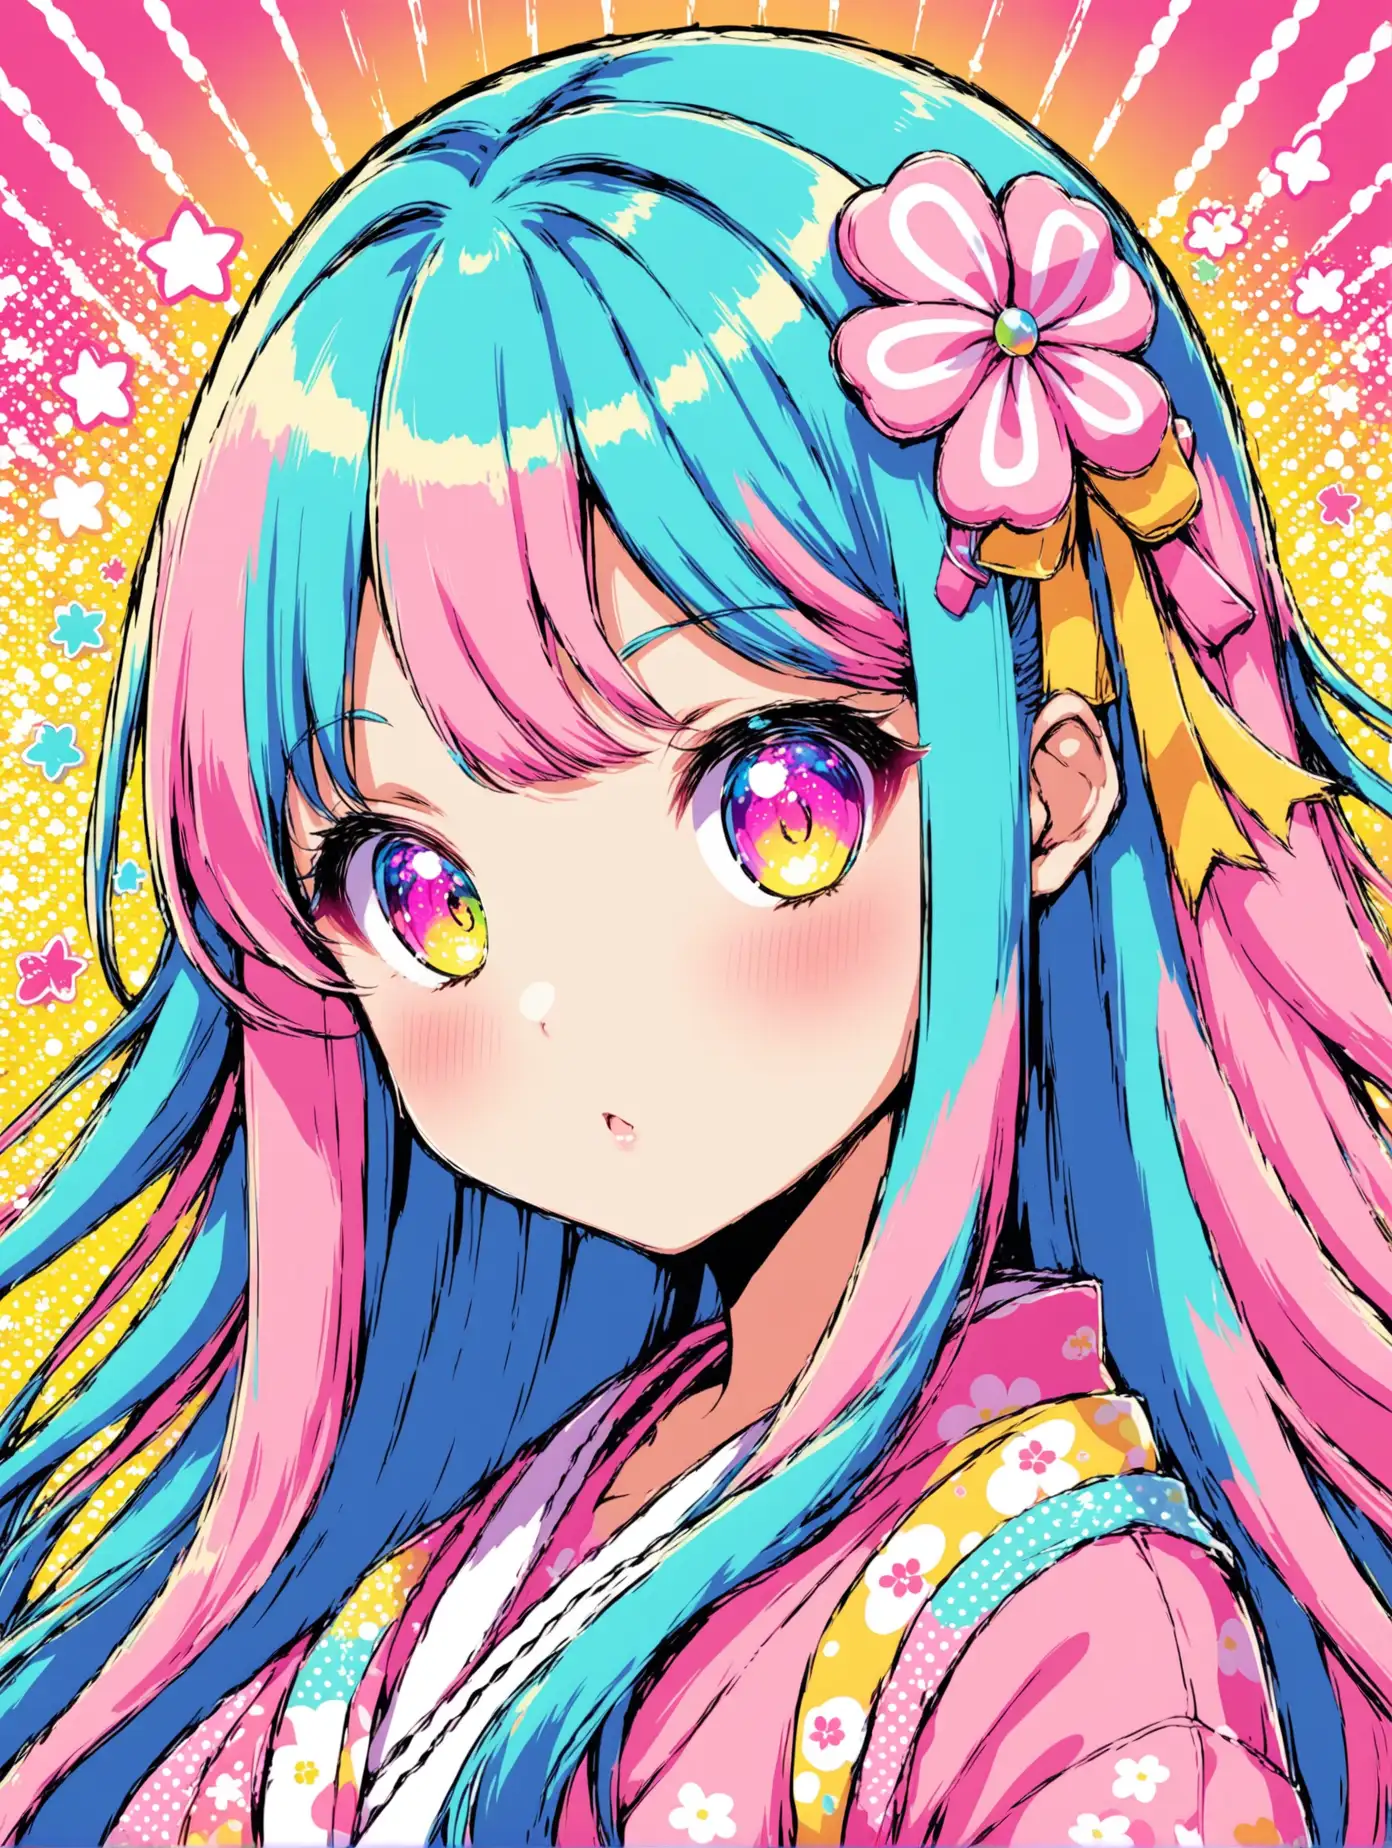 Kawaii Anime Girl with Vibrant Pastel Colors and Long Hair